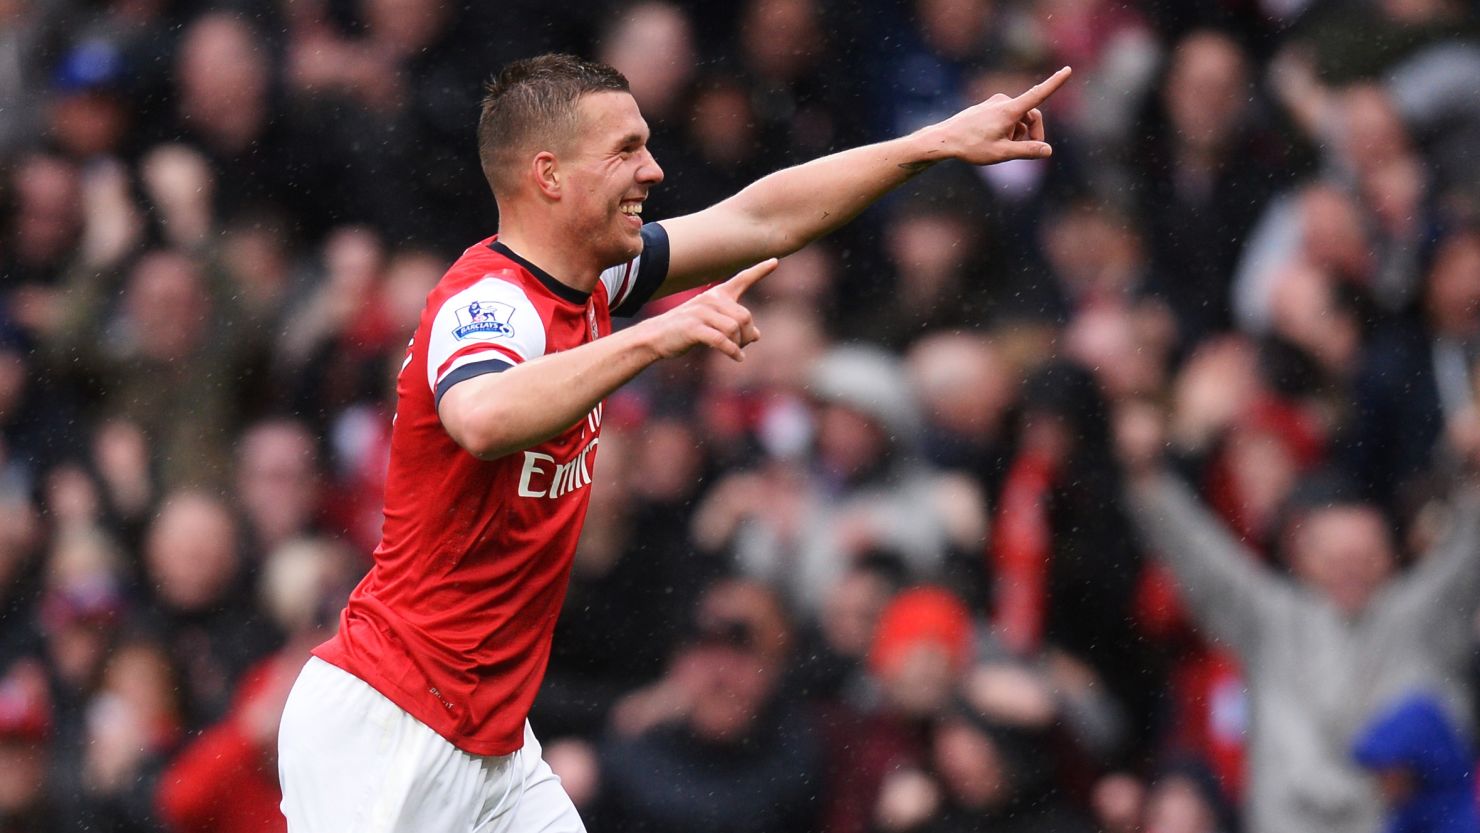 Lukas Podolski celebrates scoring Arsenal's third goal in the 3-1 over Norwich at the Emirates Stadium.